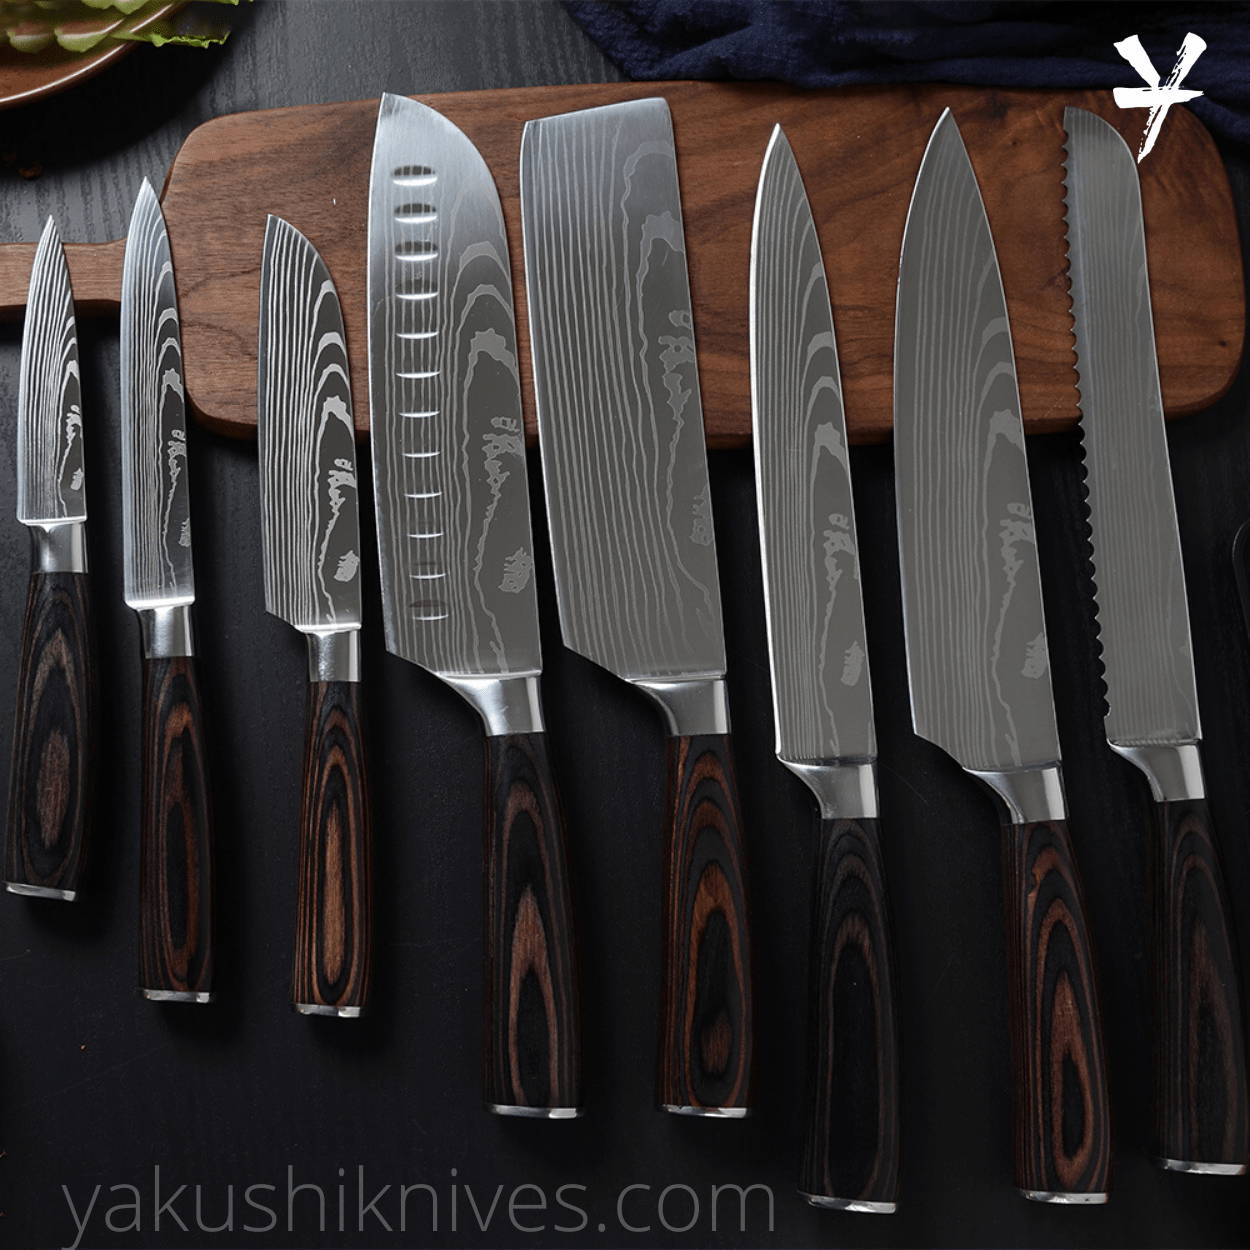 Japanese Knife Set, Chef Knife Set, Damascus Knives, Professional Kitchen Knives